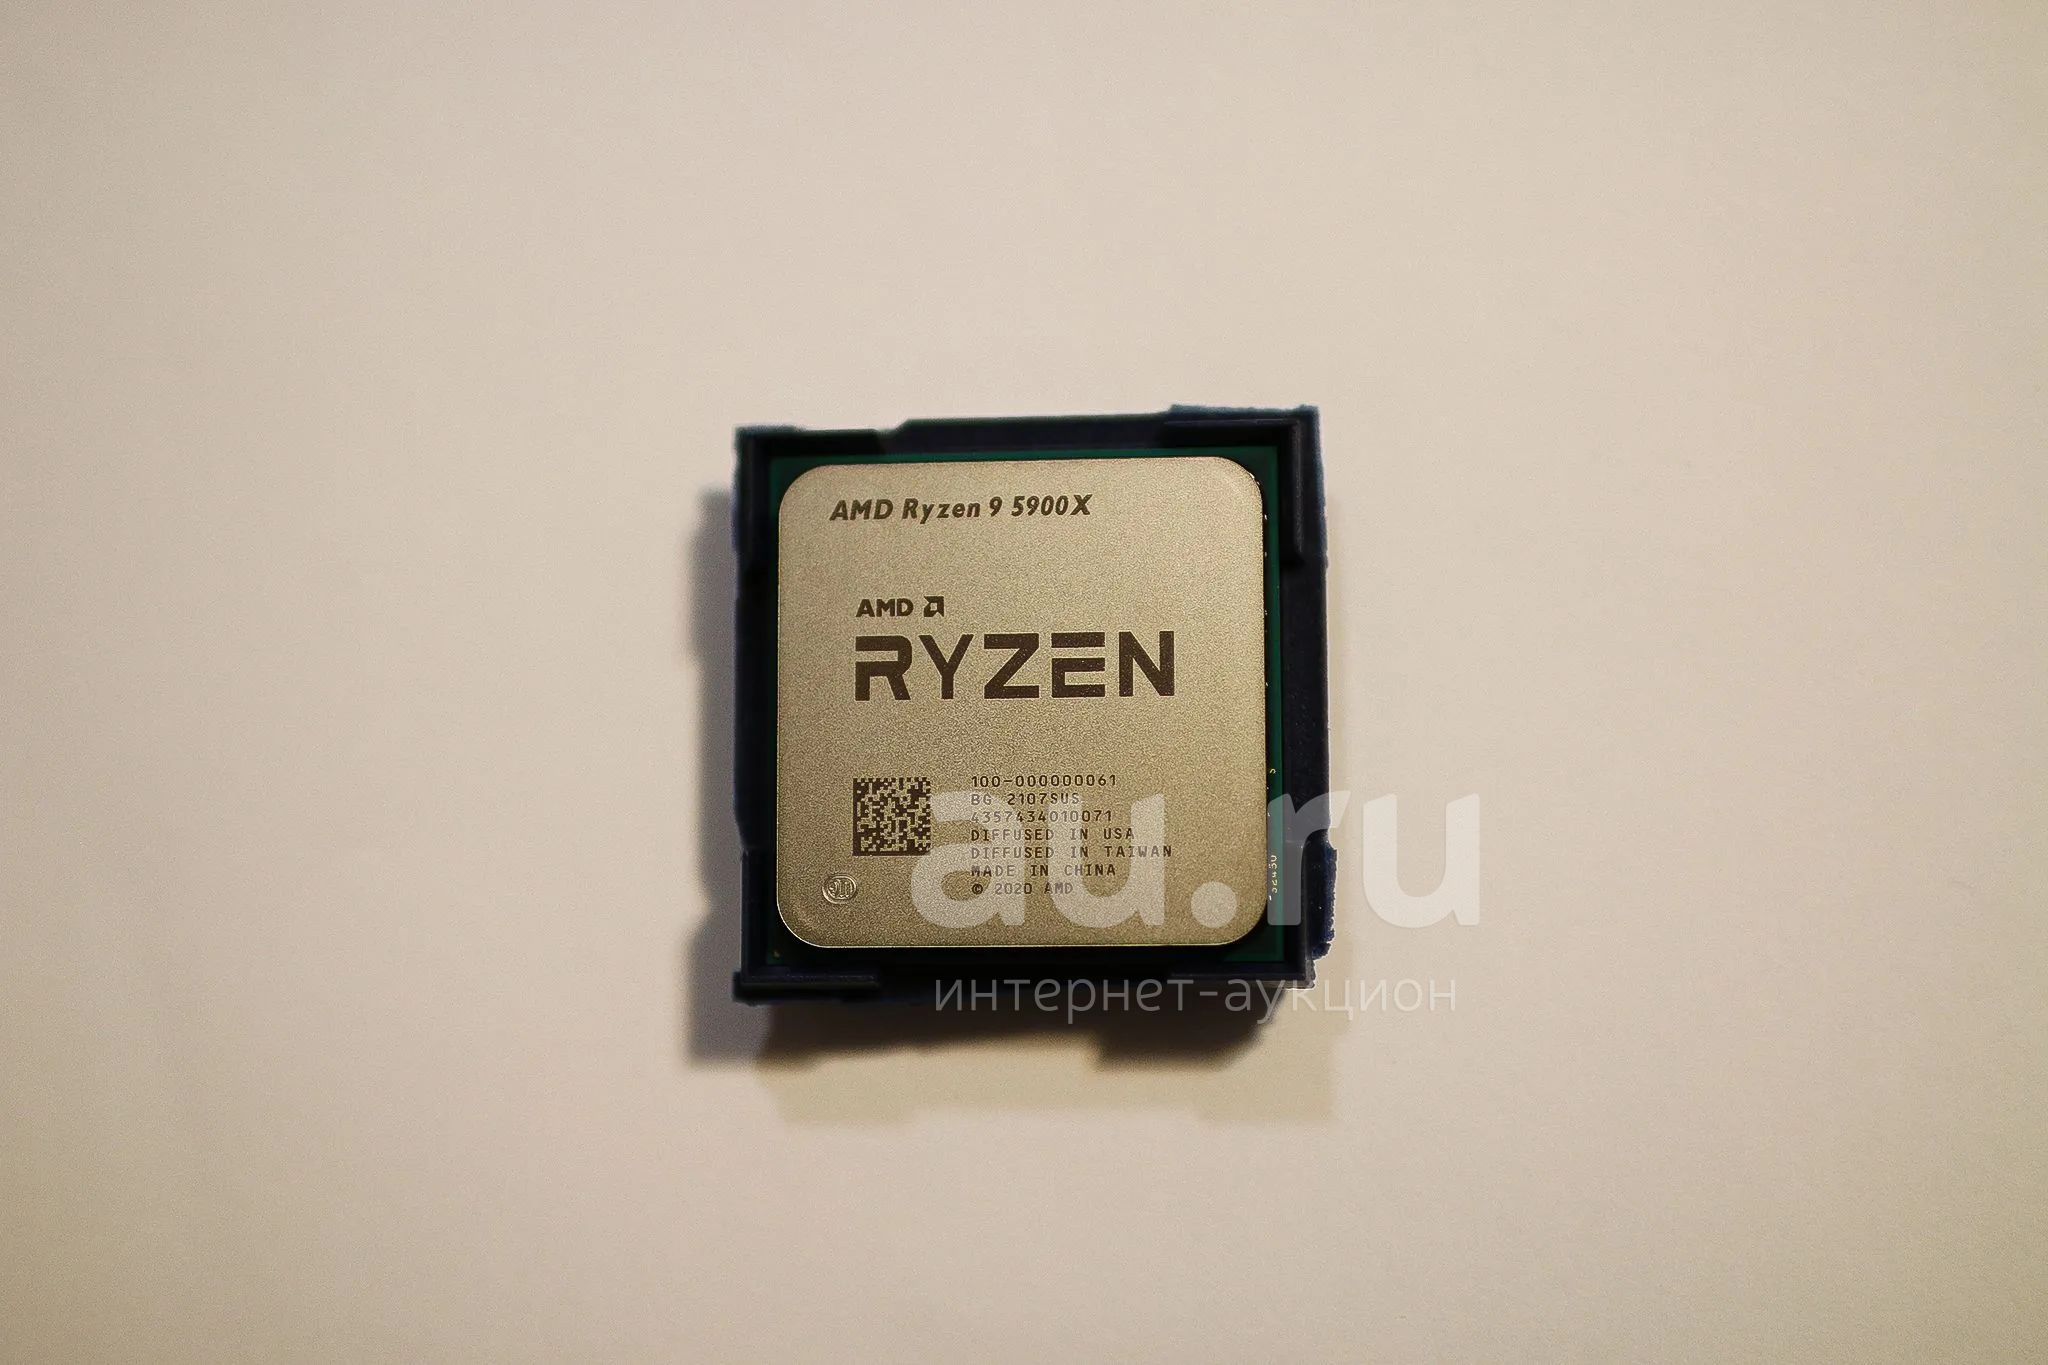 Amd ryzen 9 5900x oem. AMD CPU AMD Ryzen 9 5900x OEM. Процессор AMD Ryzen 9 5900x OEM am4 Vermeer. Процессор AMD Ryzen 9 5900x Box. AMD Ryzen 9 3970x OEM.